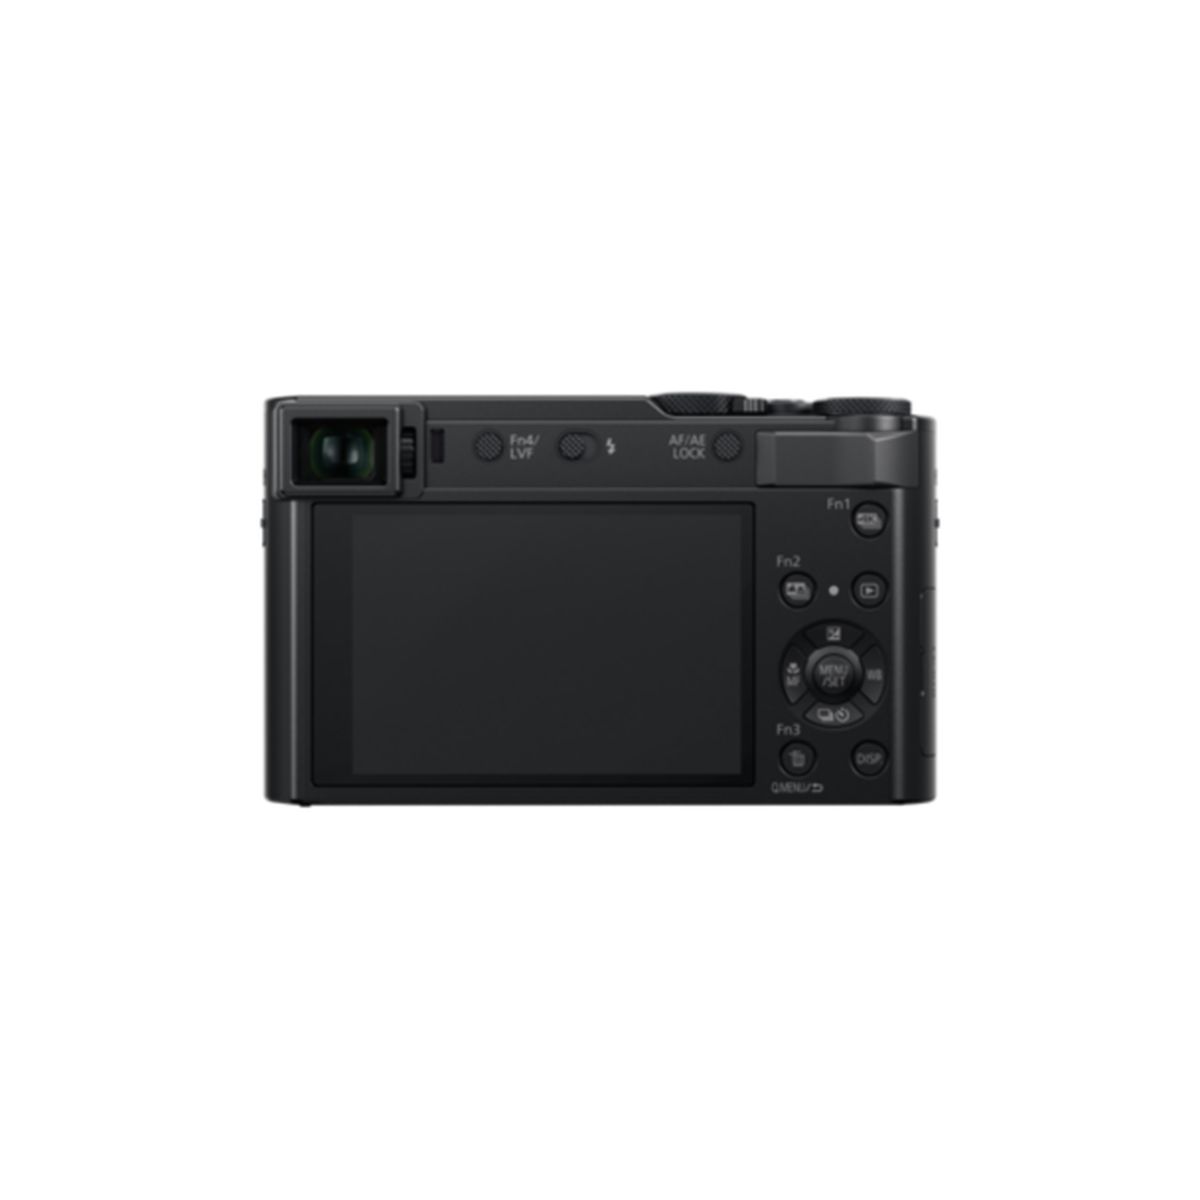 Panasonic DC-TZ202D schwarz Digital Kompaktkamera